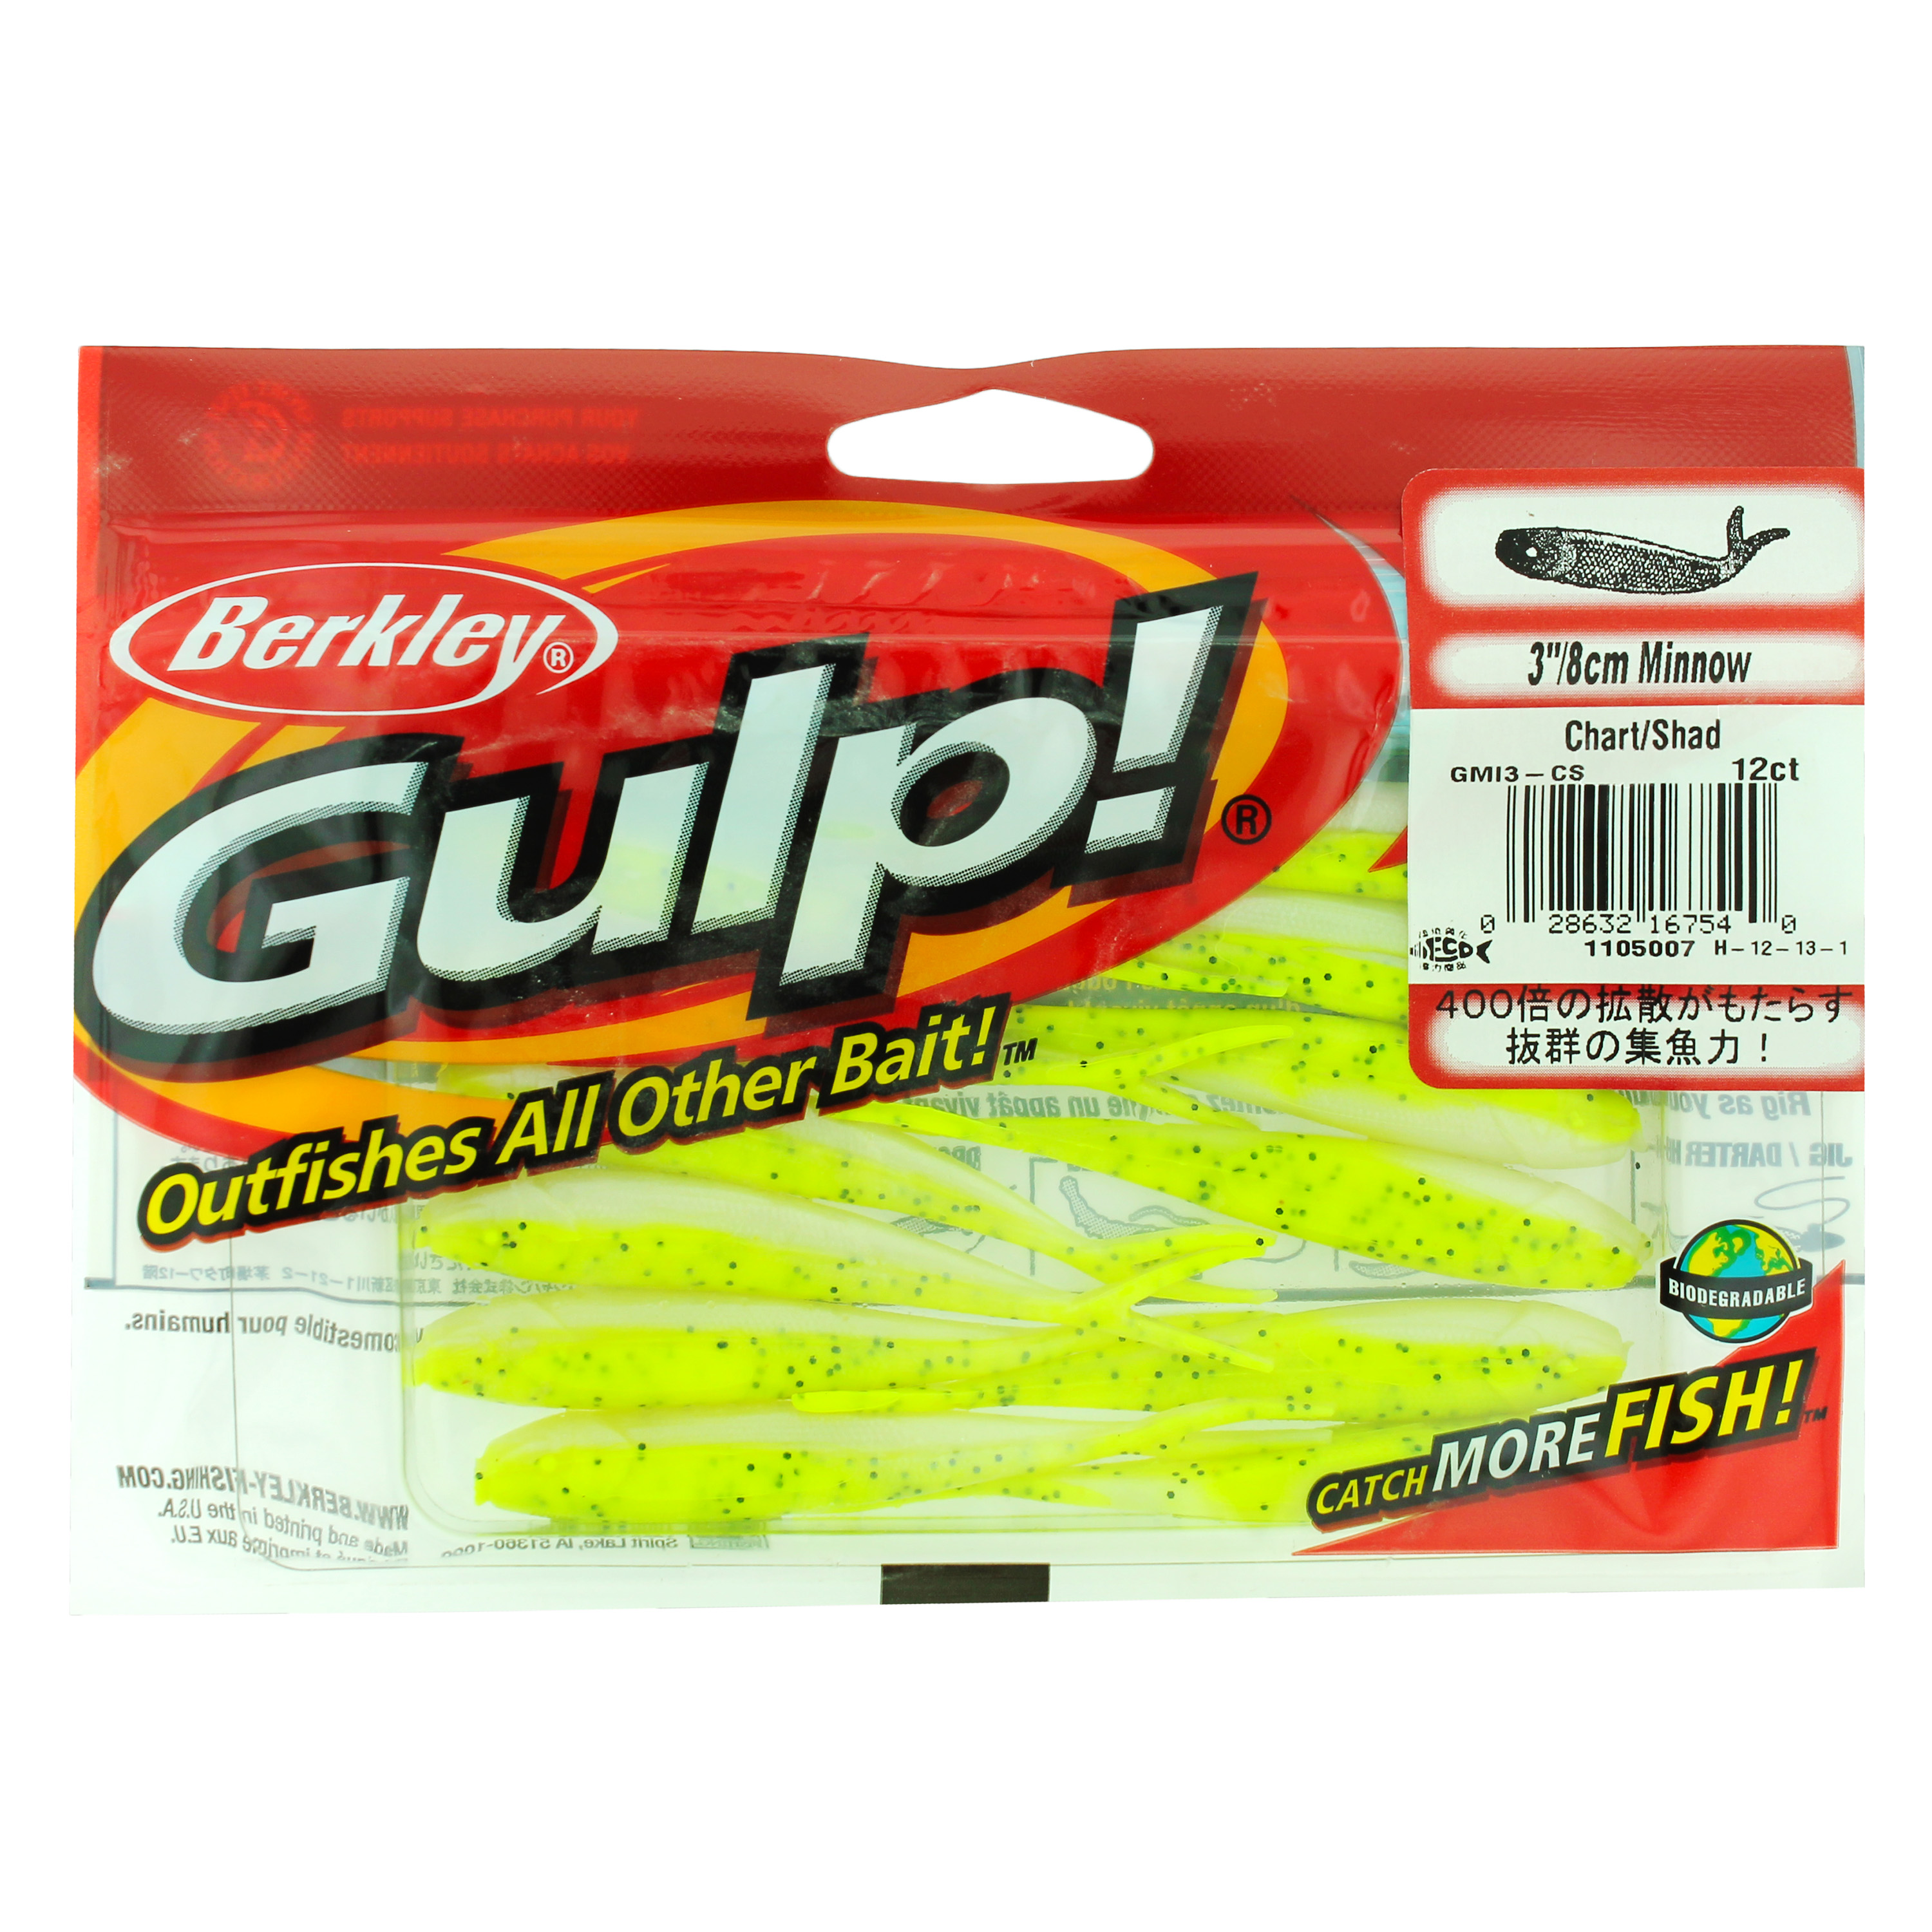 Berkley Gulp! Minnow Soft Bait - image 1 of 2